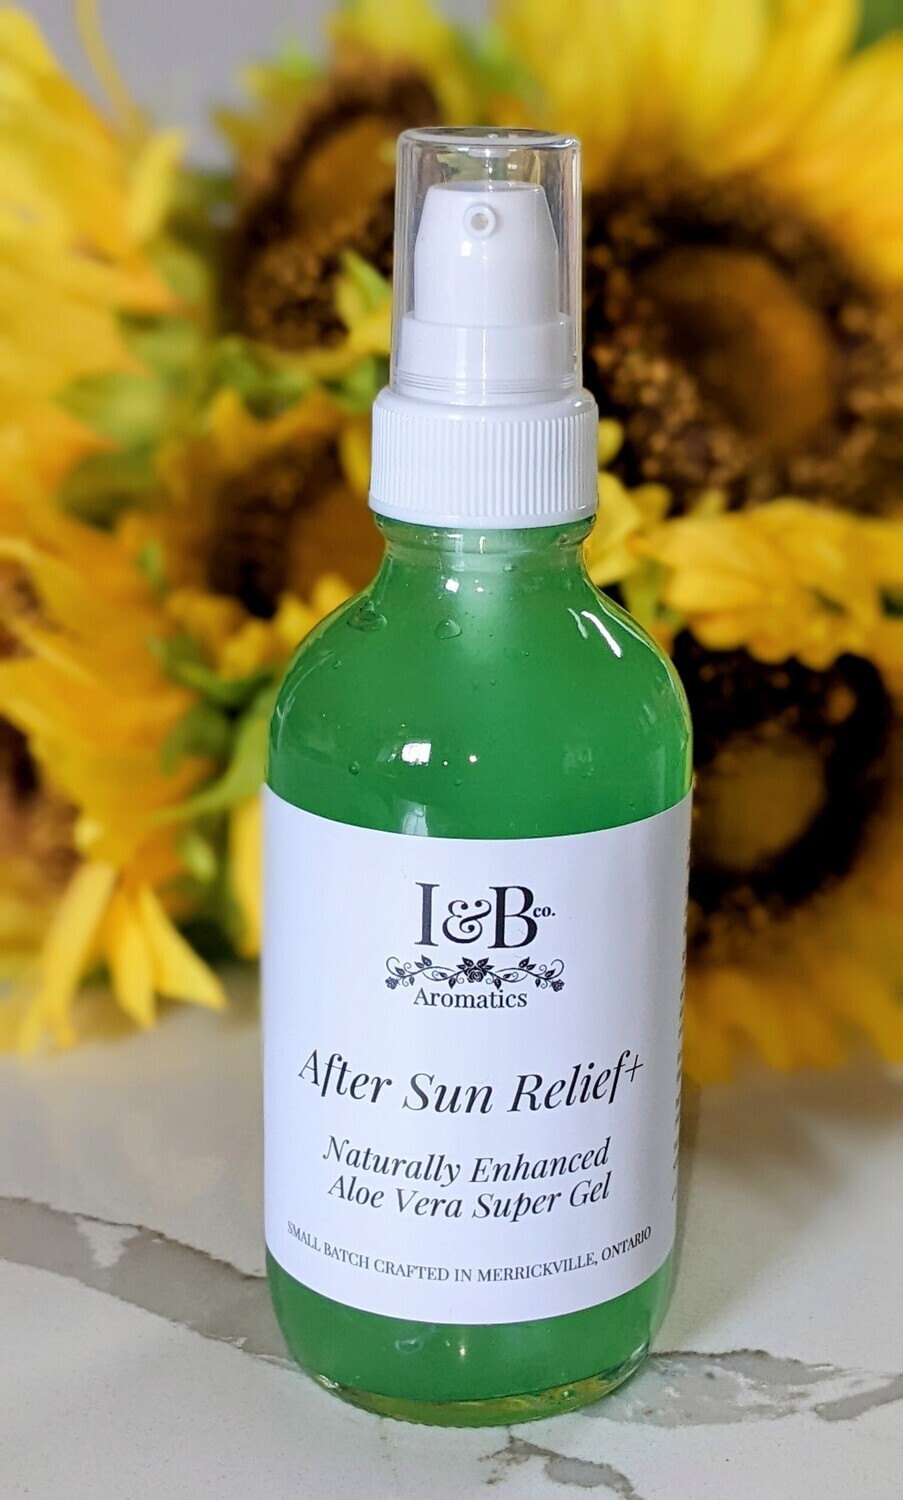 After Sun Relief+
Naturally Enhanced Aloe Vera Super Gel